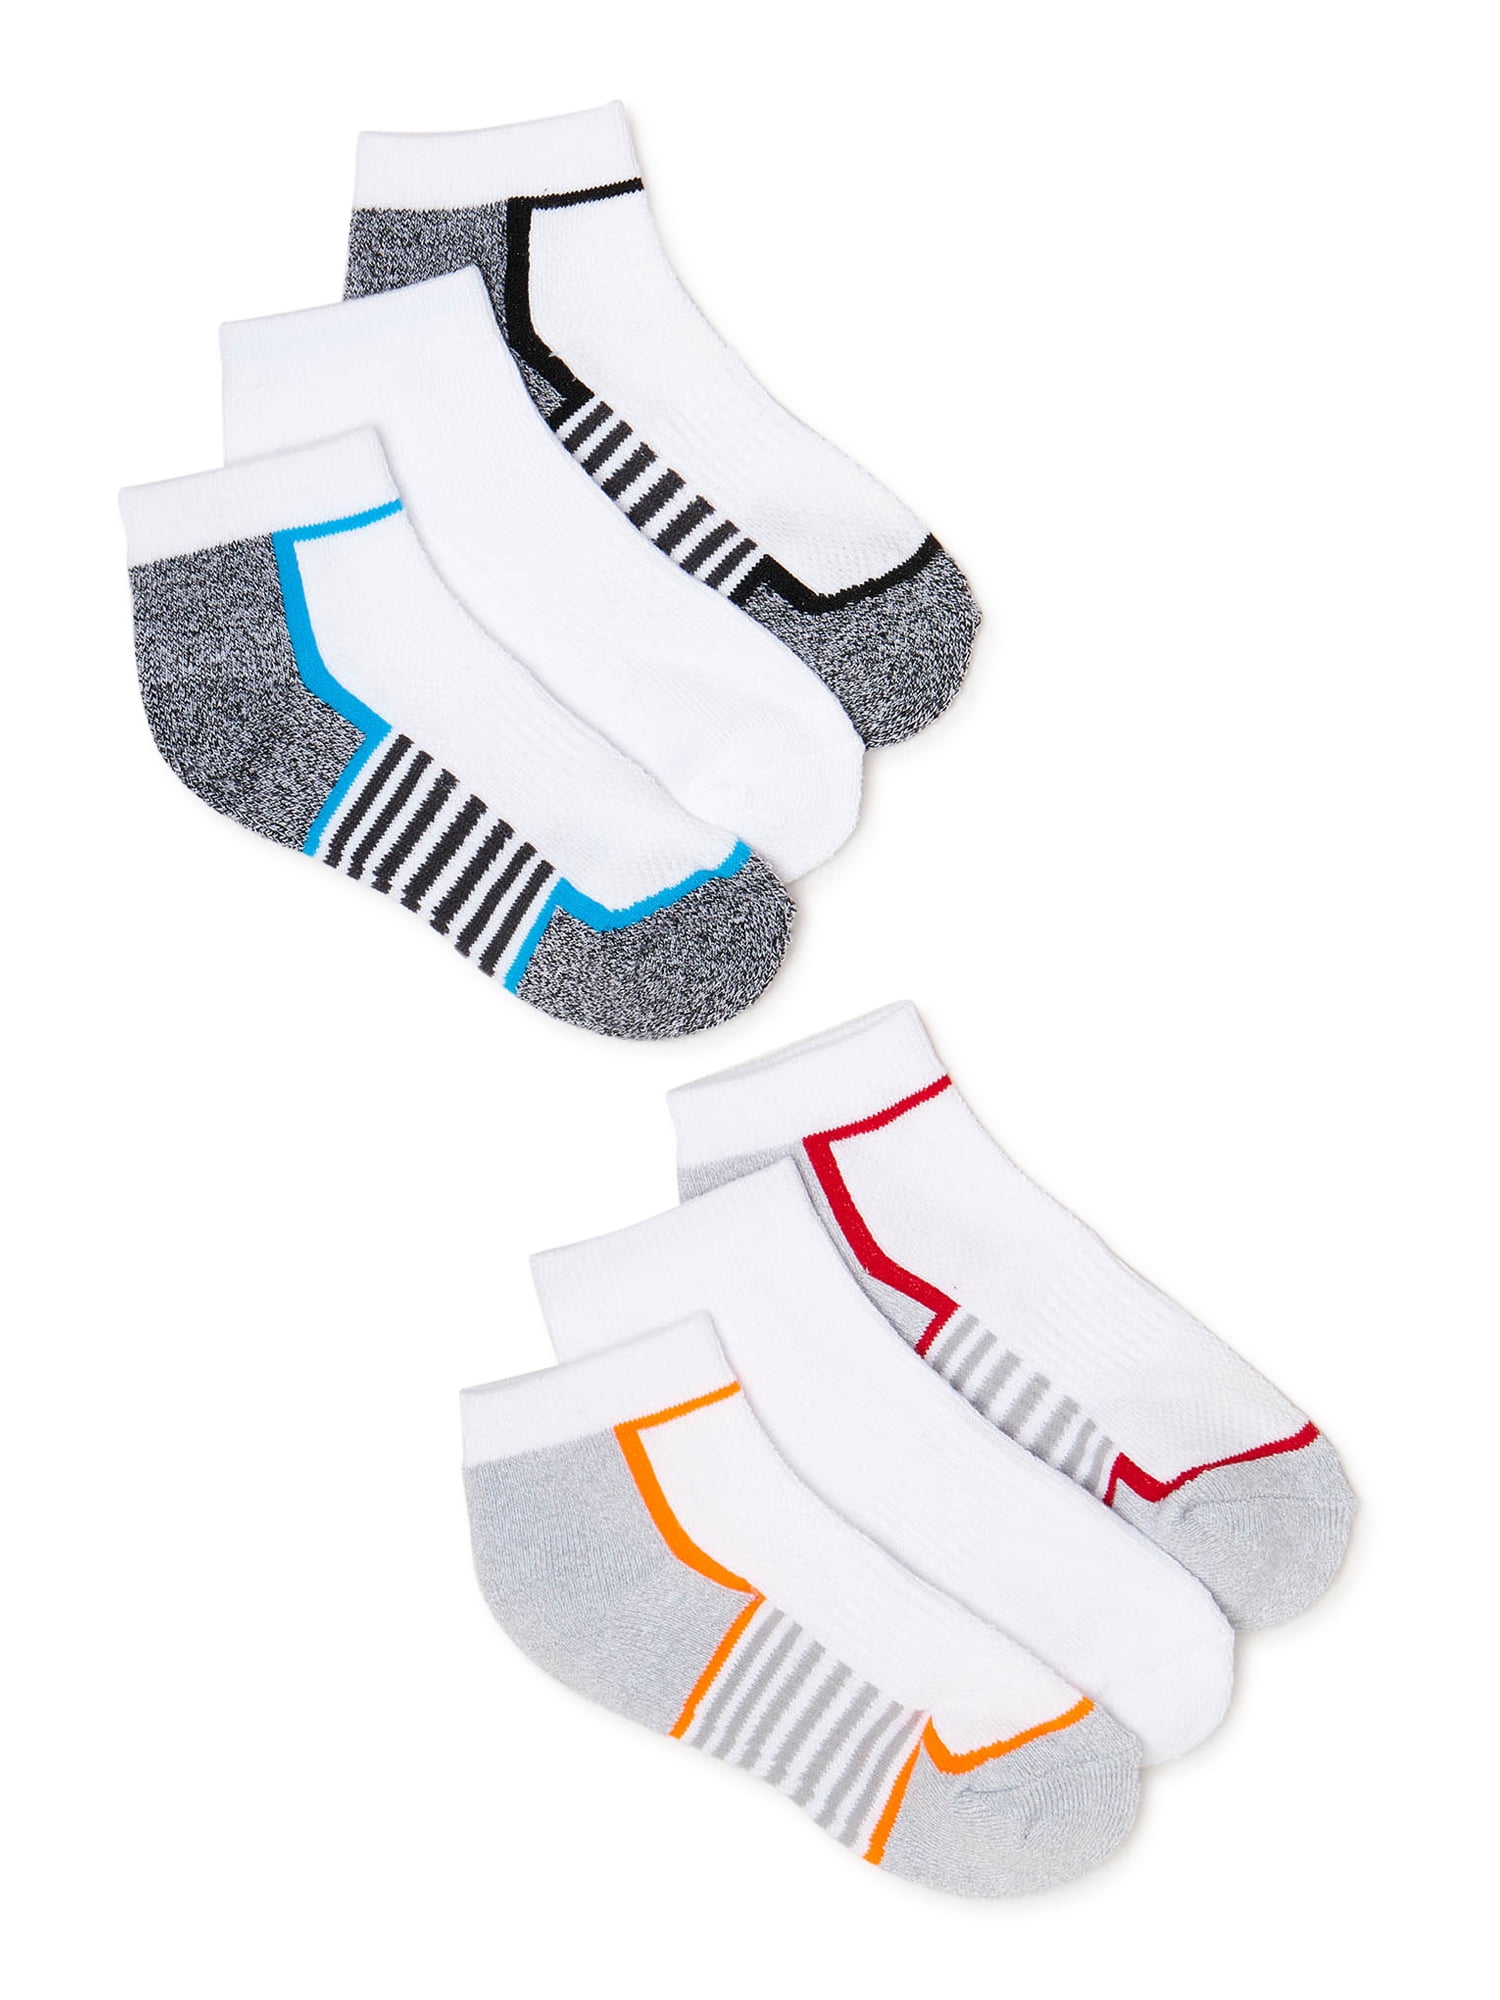 NEW 6 PAIR SOCK PACK unisex Cotton Ankle Low Cut Short Quarter Gym/Trainer Socks 